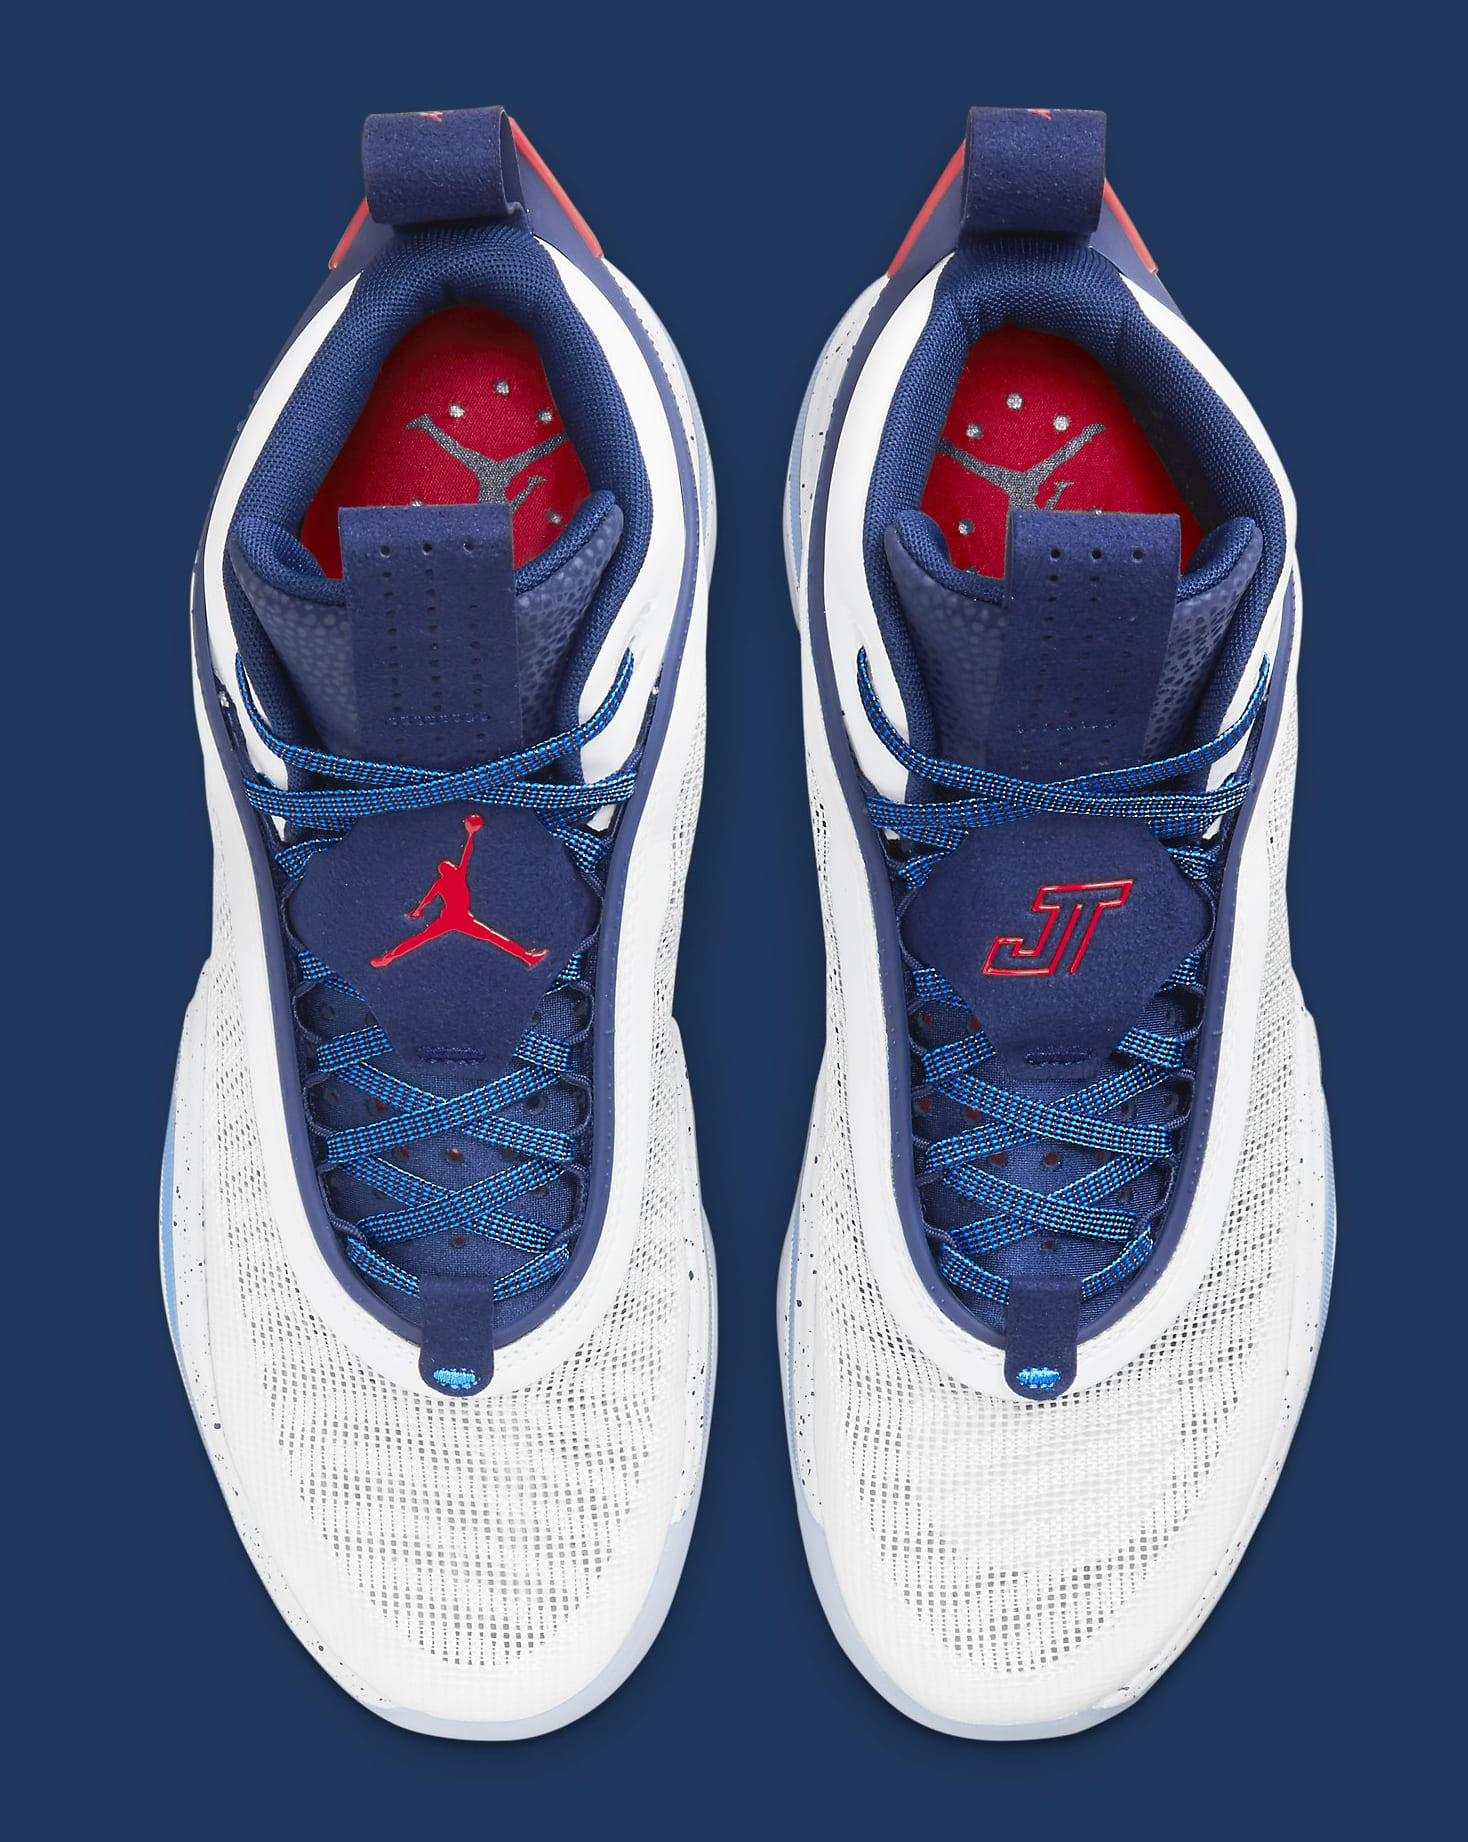 USA Colors Appear on Jayson Tatum's Air Jordan 36 PE